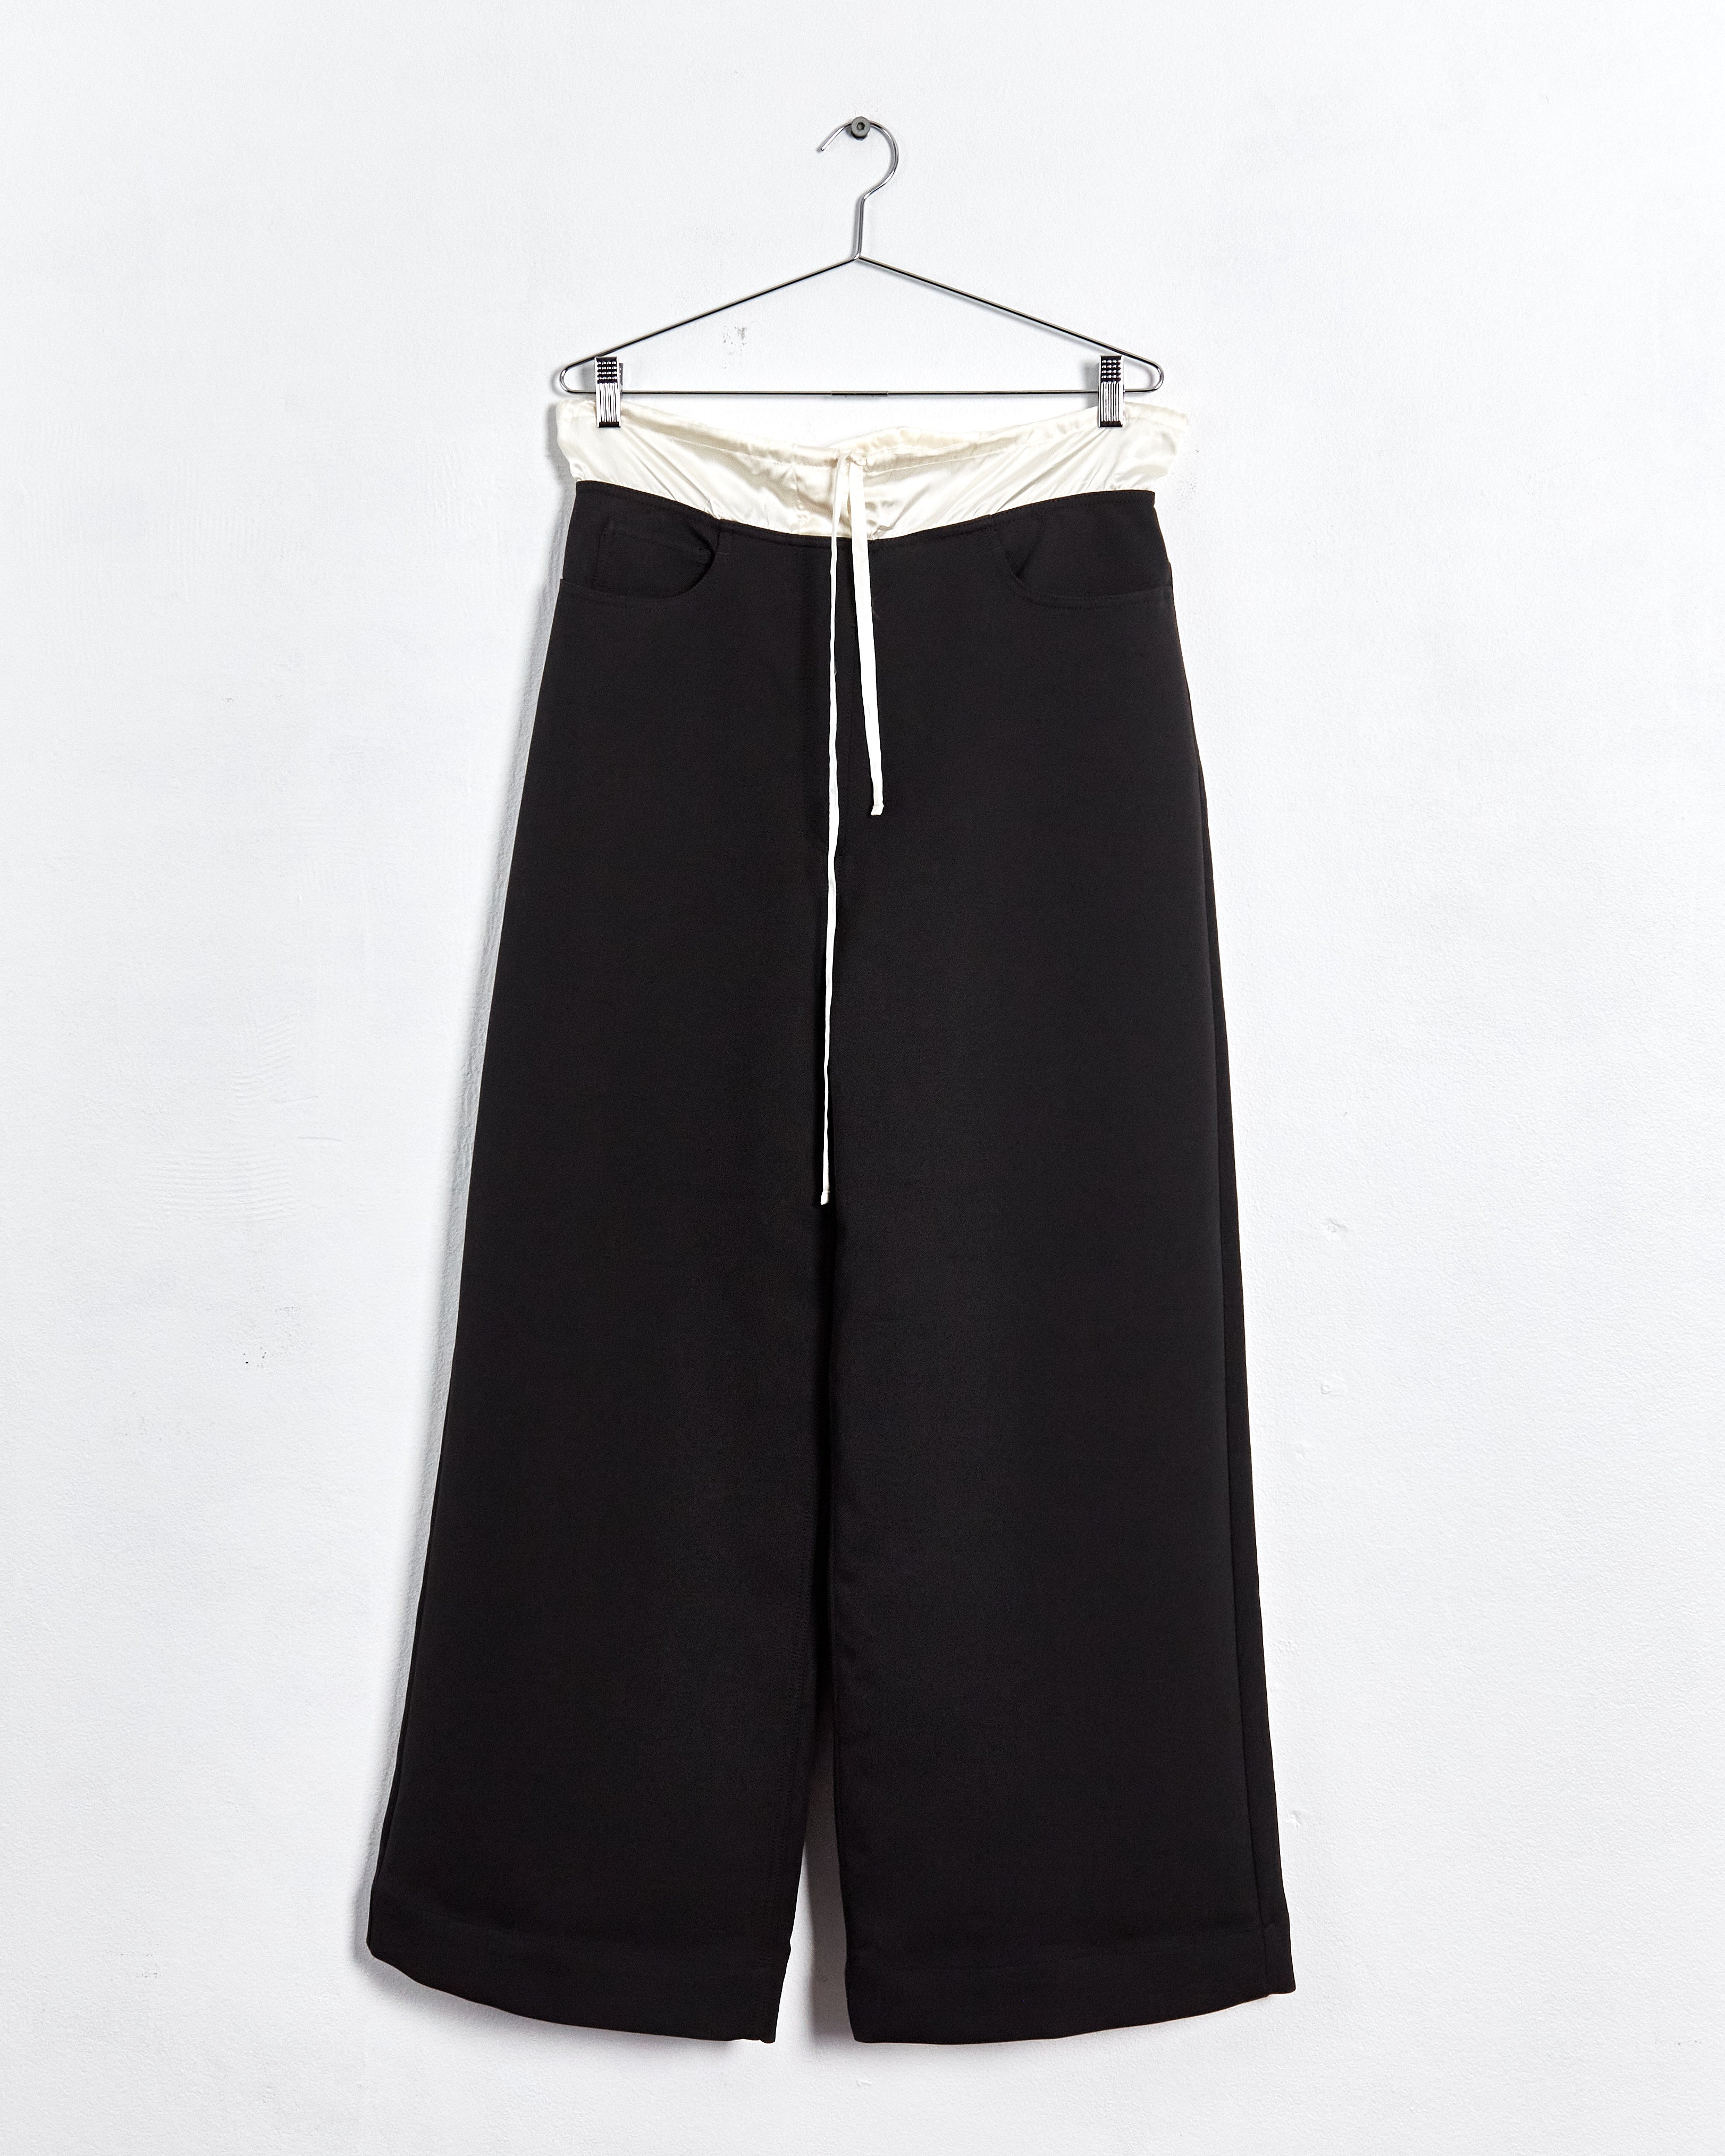 Acne Studios 'satin contrast trousers', black, 6 – RELIK editions